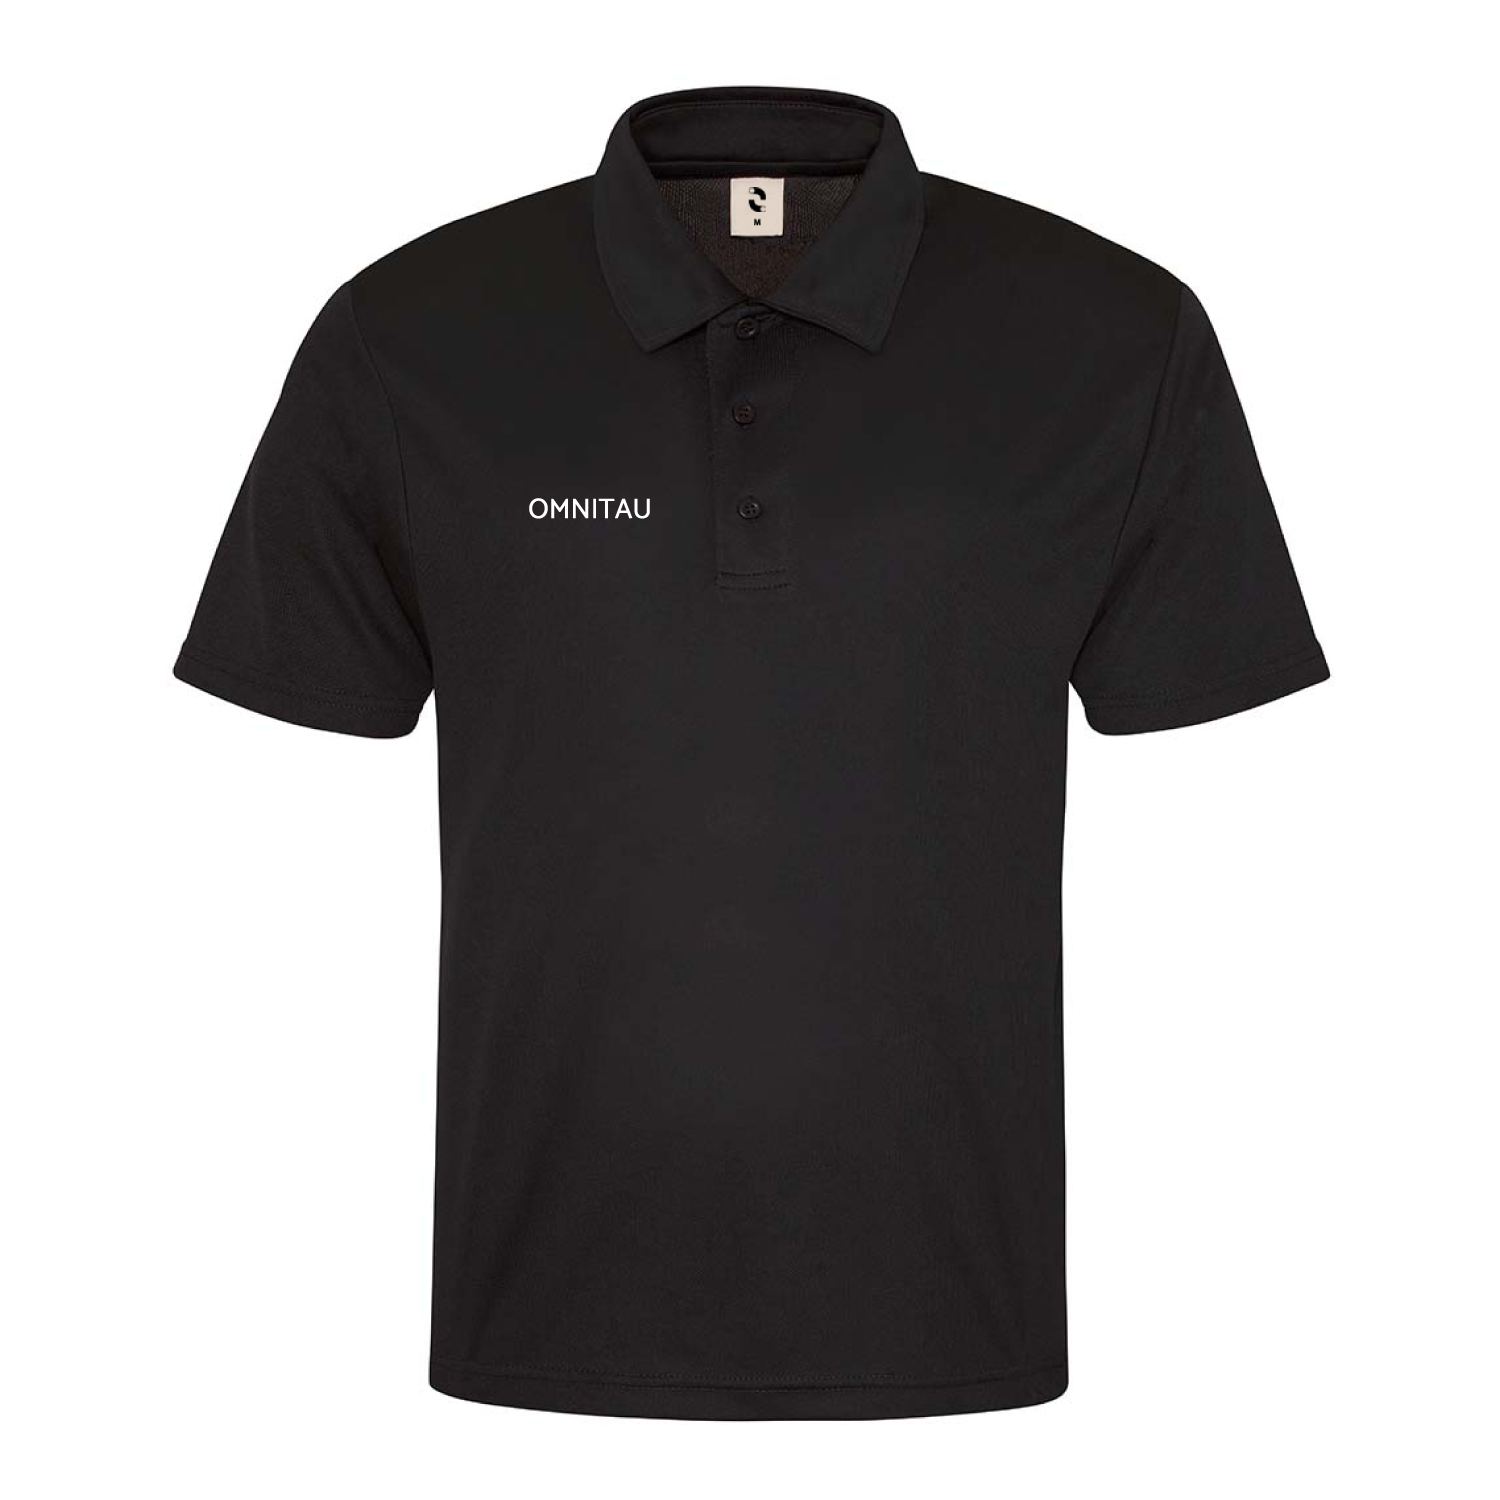 Omnitau Men's Team Sports Core Football Polo Shirt - Black